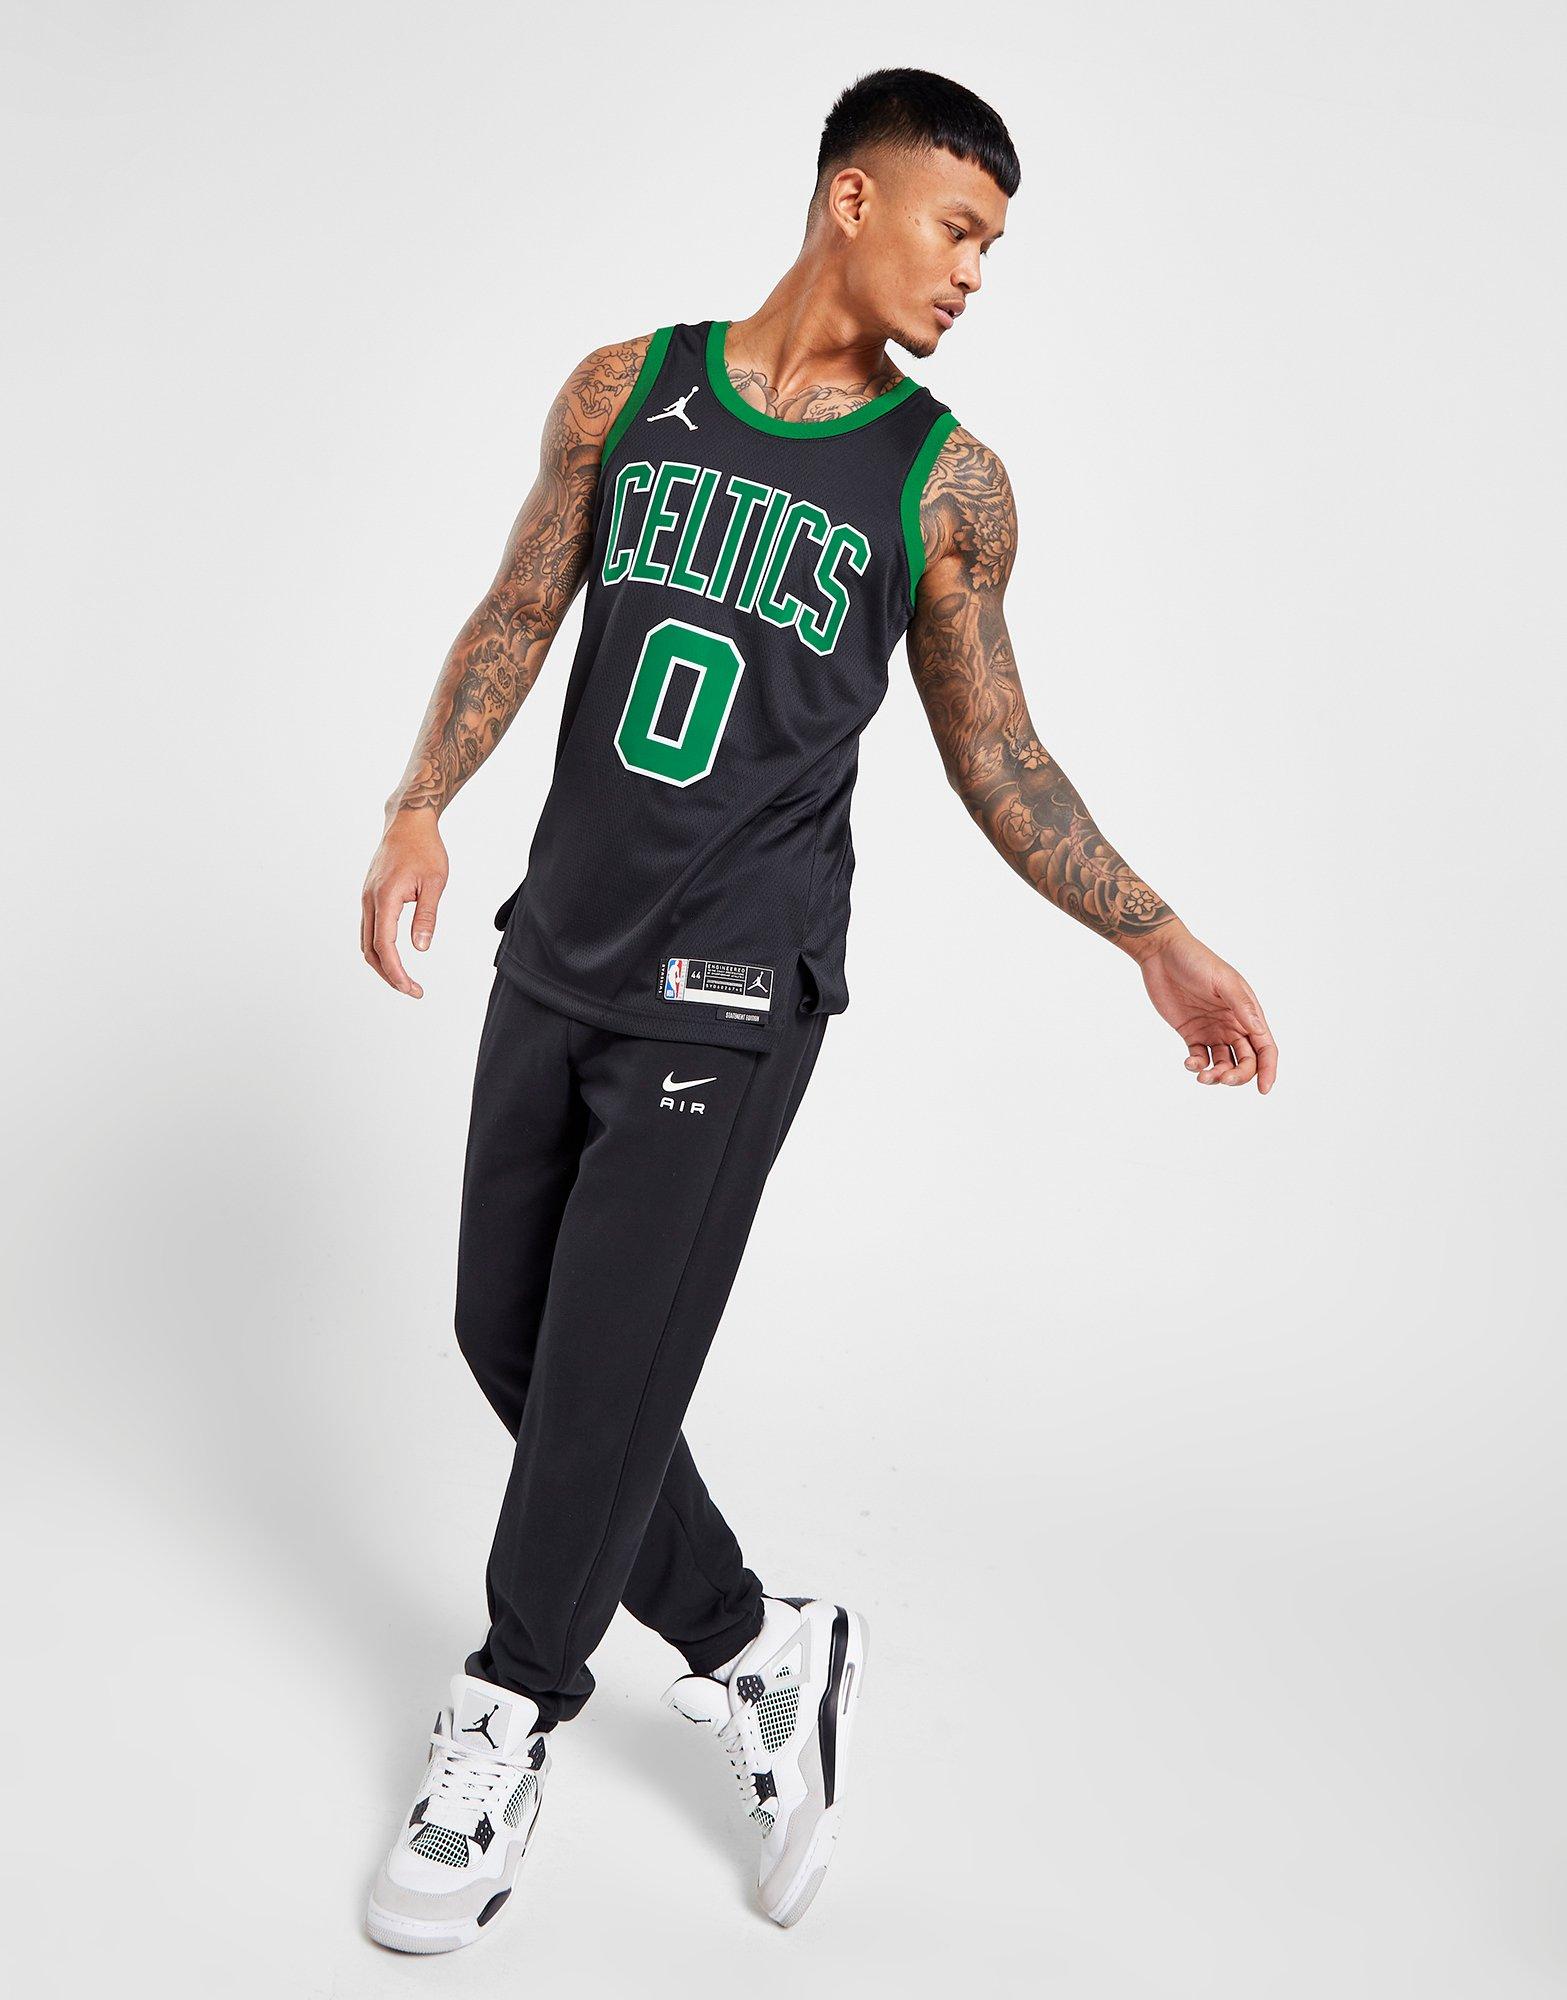 Skeleton Celtics Boston Jayson Tatum shirt, hoodie, sweatshirt and tank top